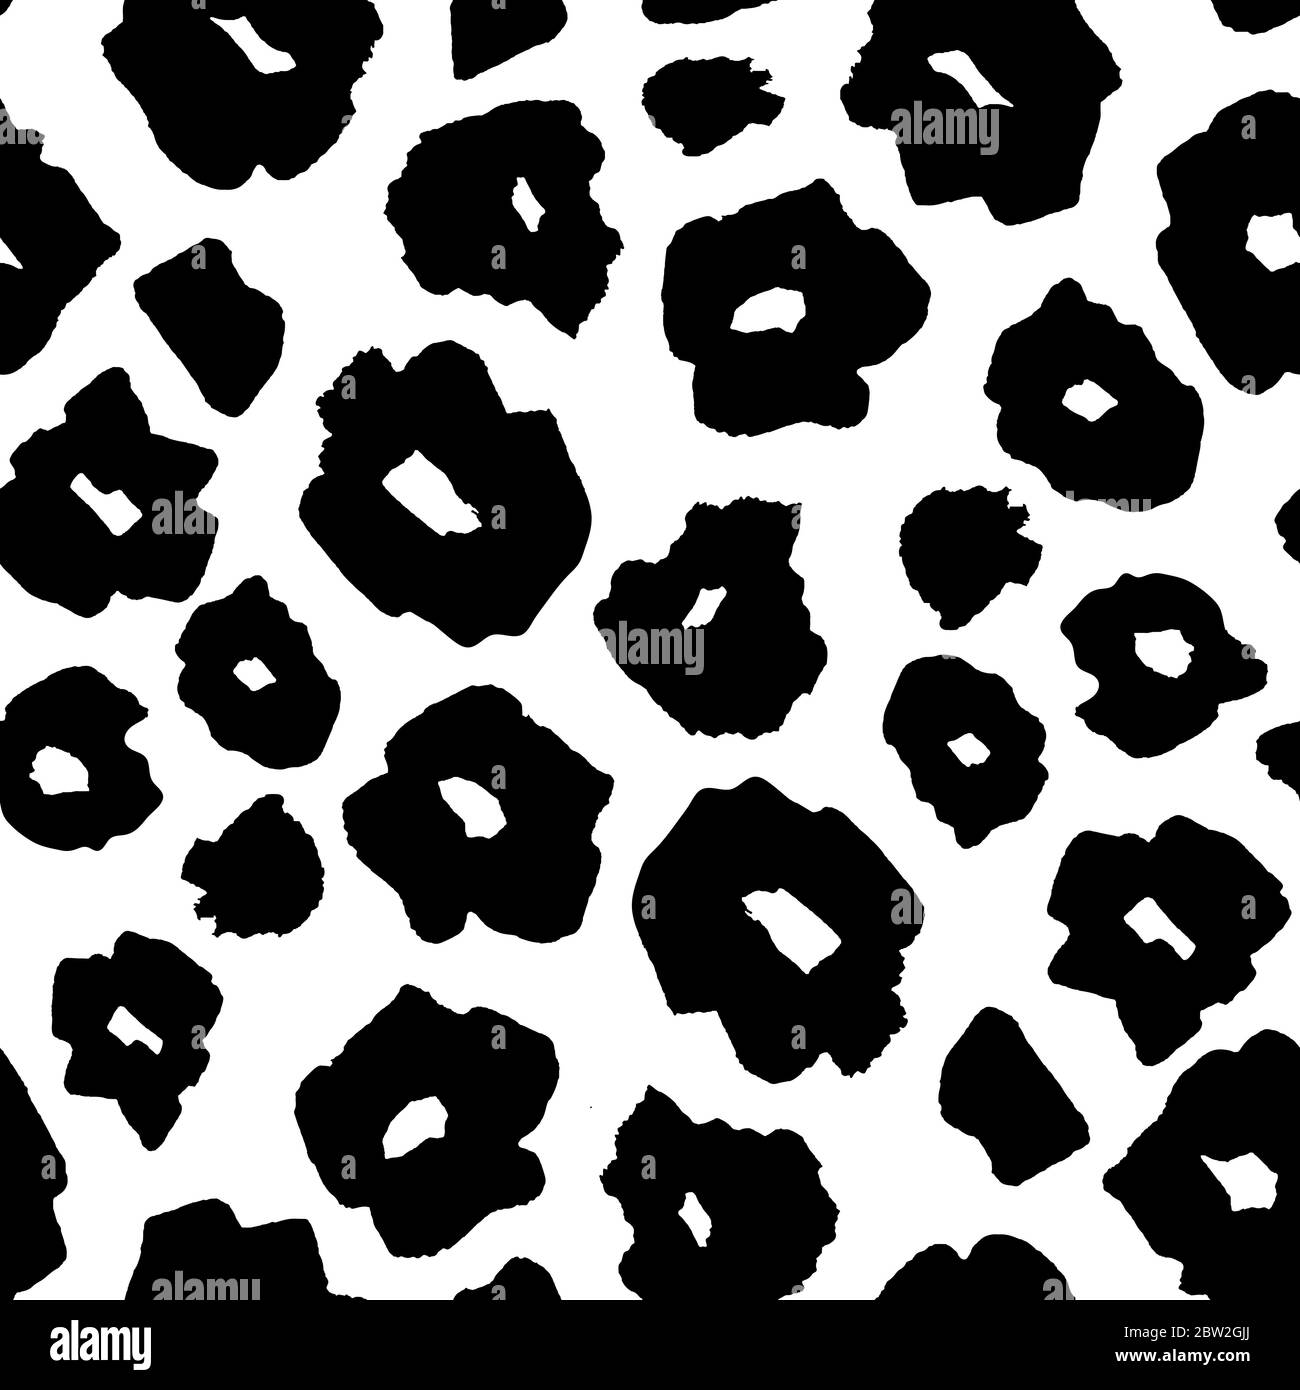 Black and White Safari pattern background, jaguar or cheetah panther animal skin print, vector seamless design. African safari leopard animal fur pattern with black spots background, modern decoration Stock Vector